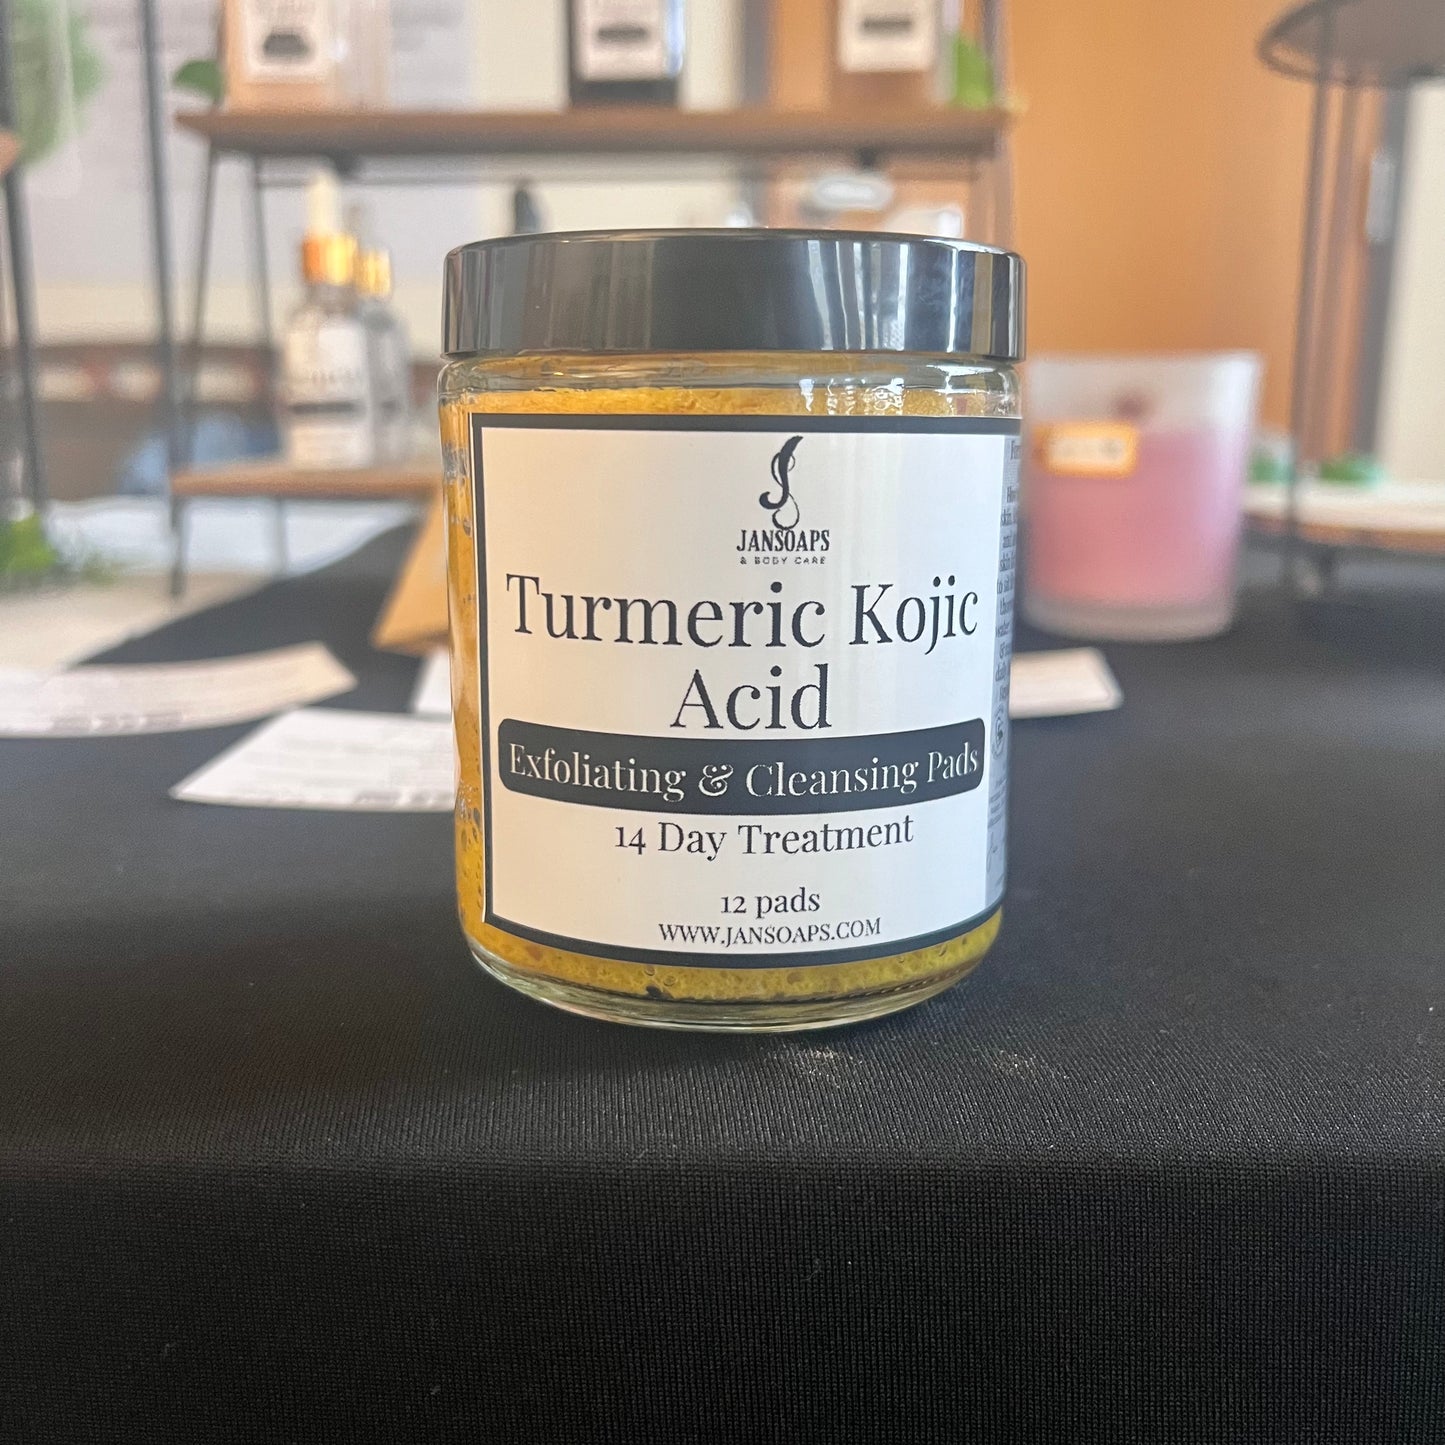 Turmeric Kojic Acid Exfoliating & Cleansing Pads